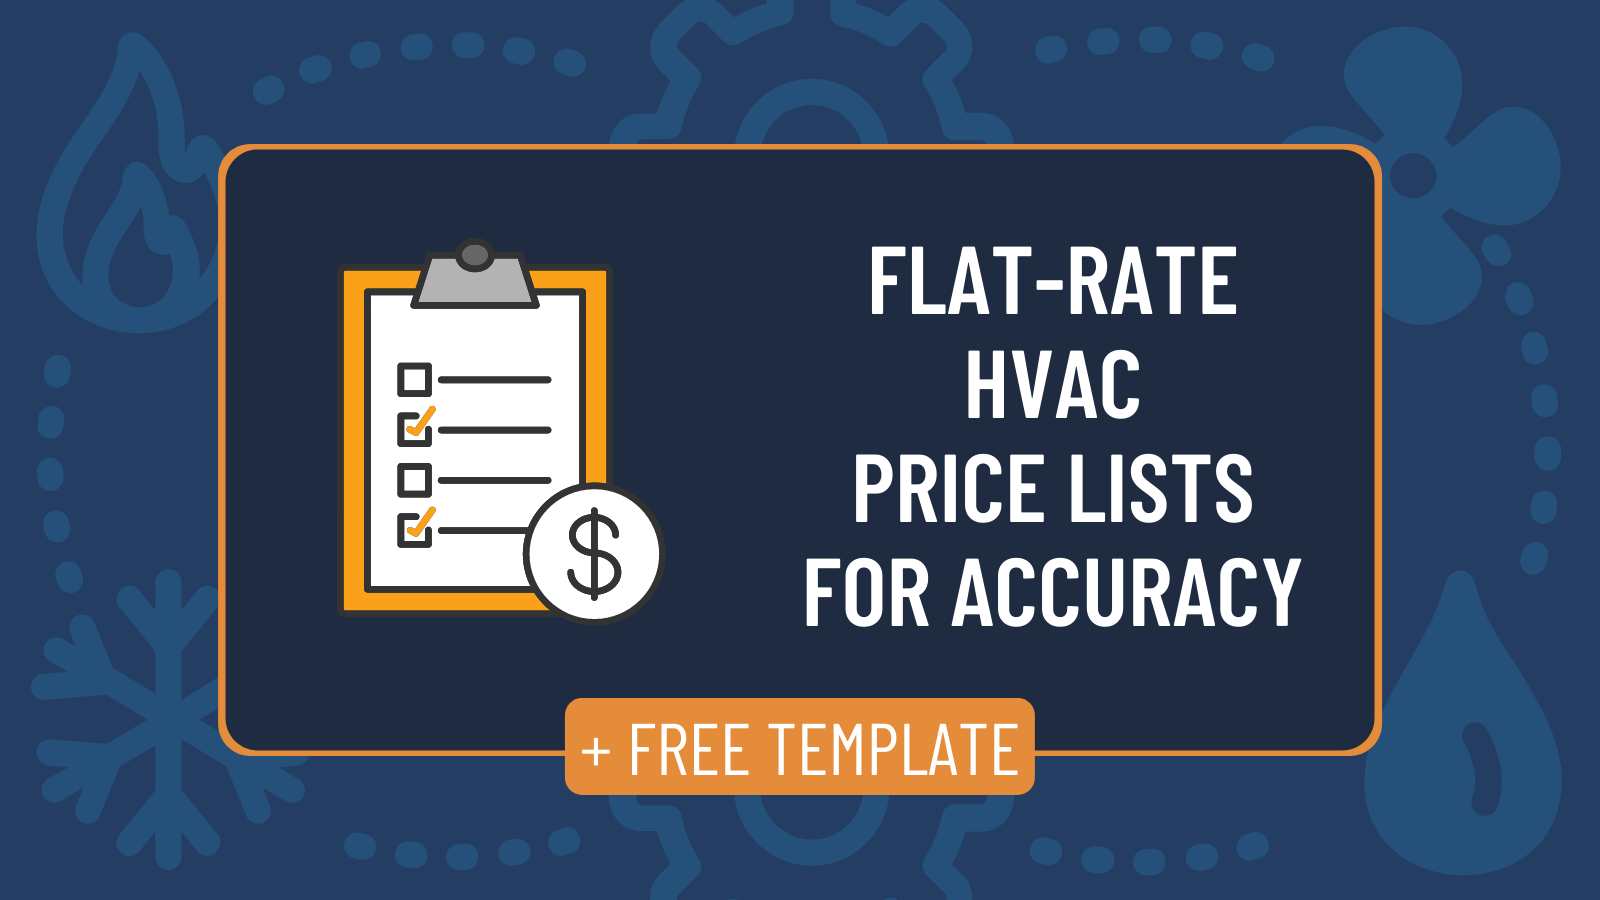 HVAC FlatRate Pricing Template Free From ServiceTitan